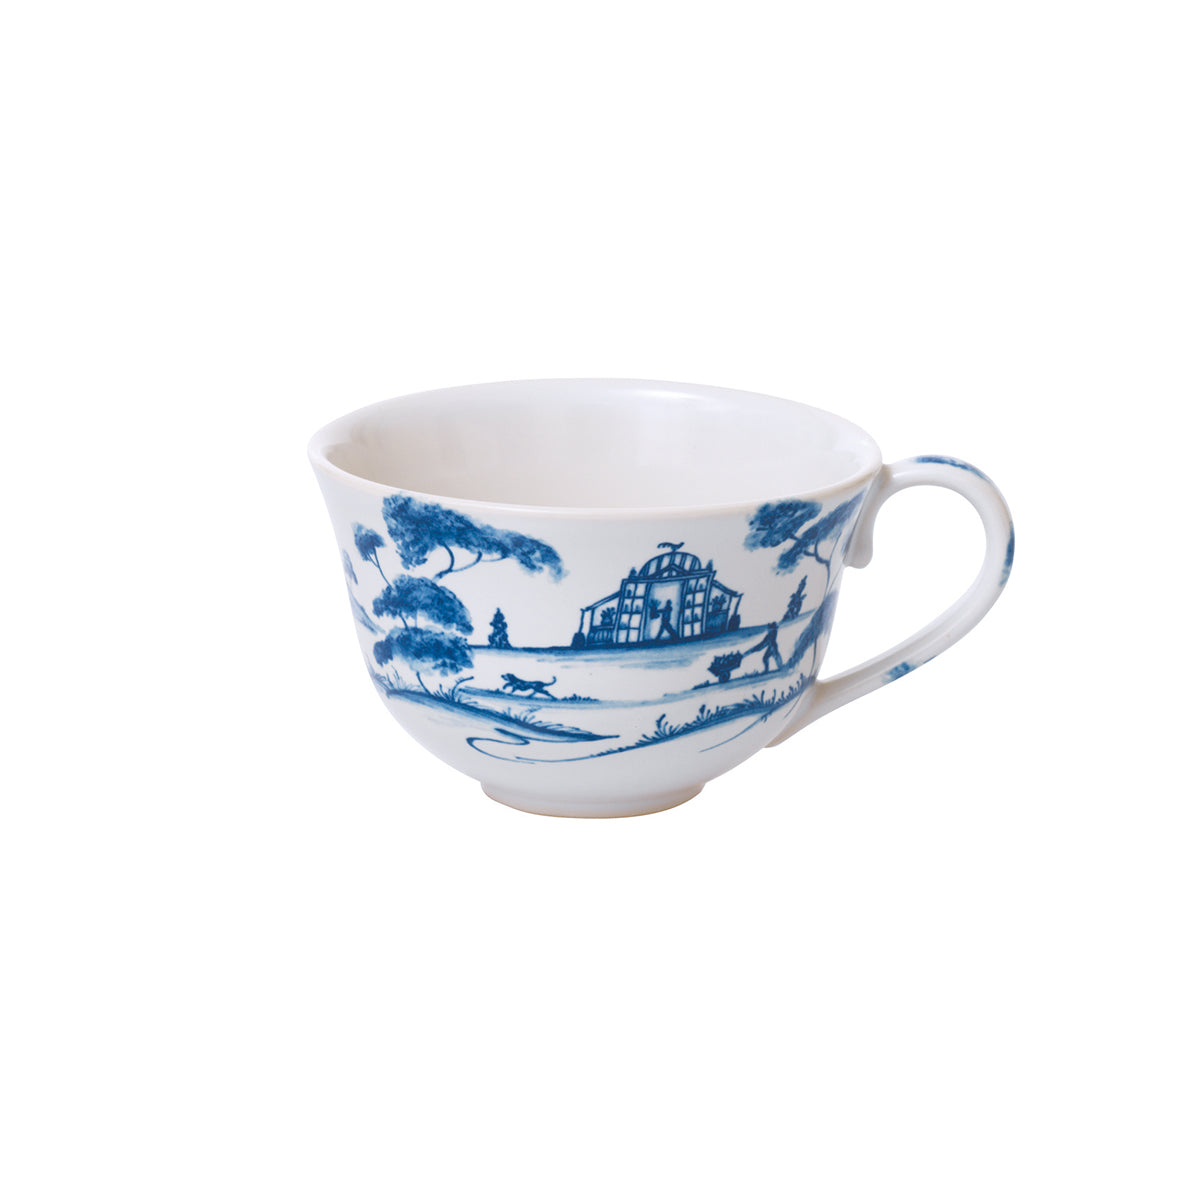 Country Estate Teacup Set-4 - Delft Blue-2nd